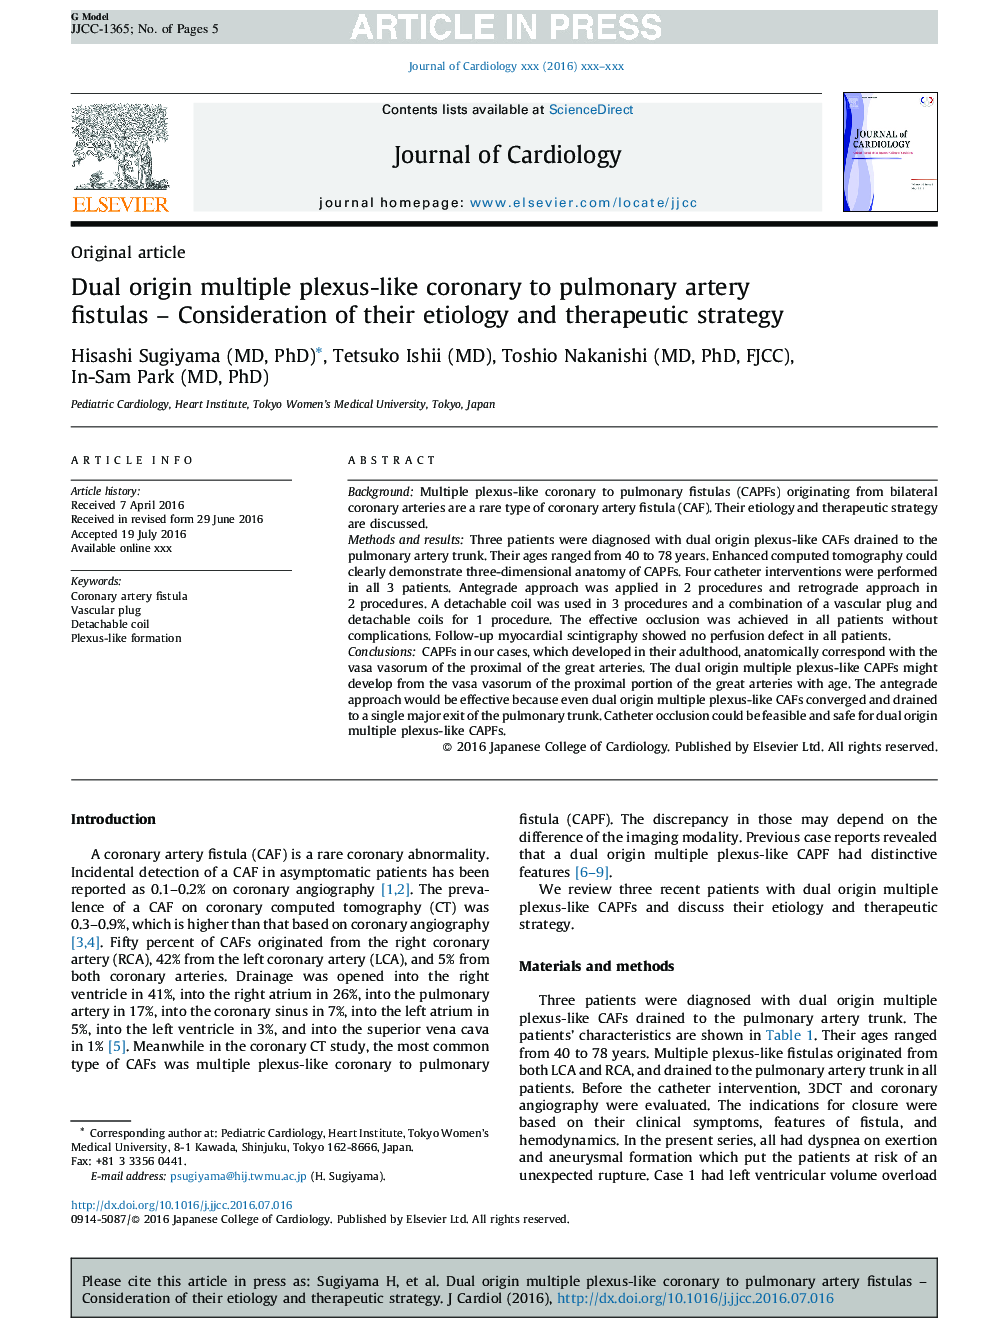 Dual origin multiple plexus-like coronary to pulmonary artery fistulas - Consideration of their etiology and therapeutic strategy